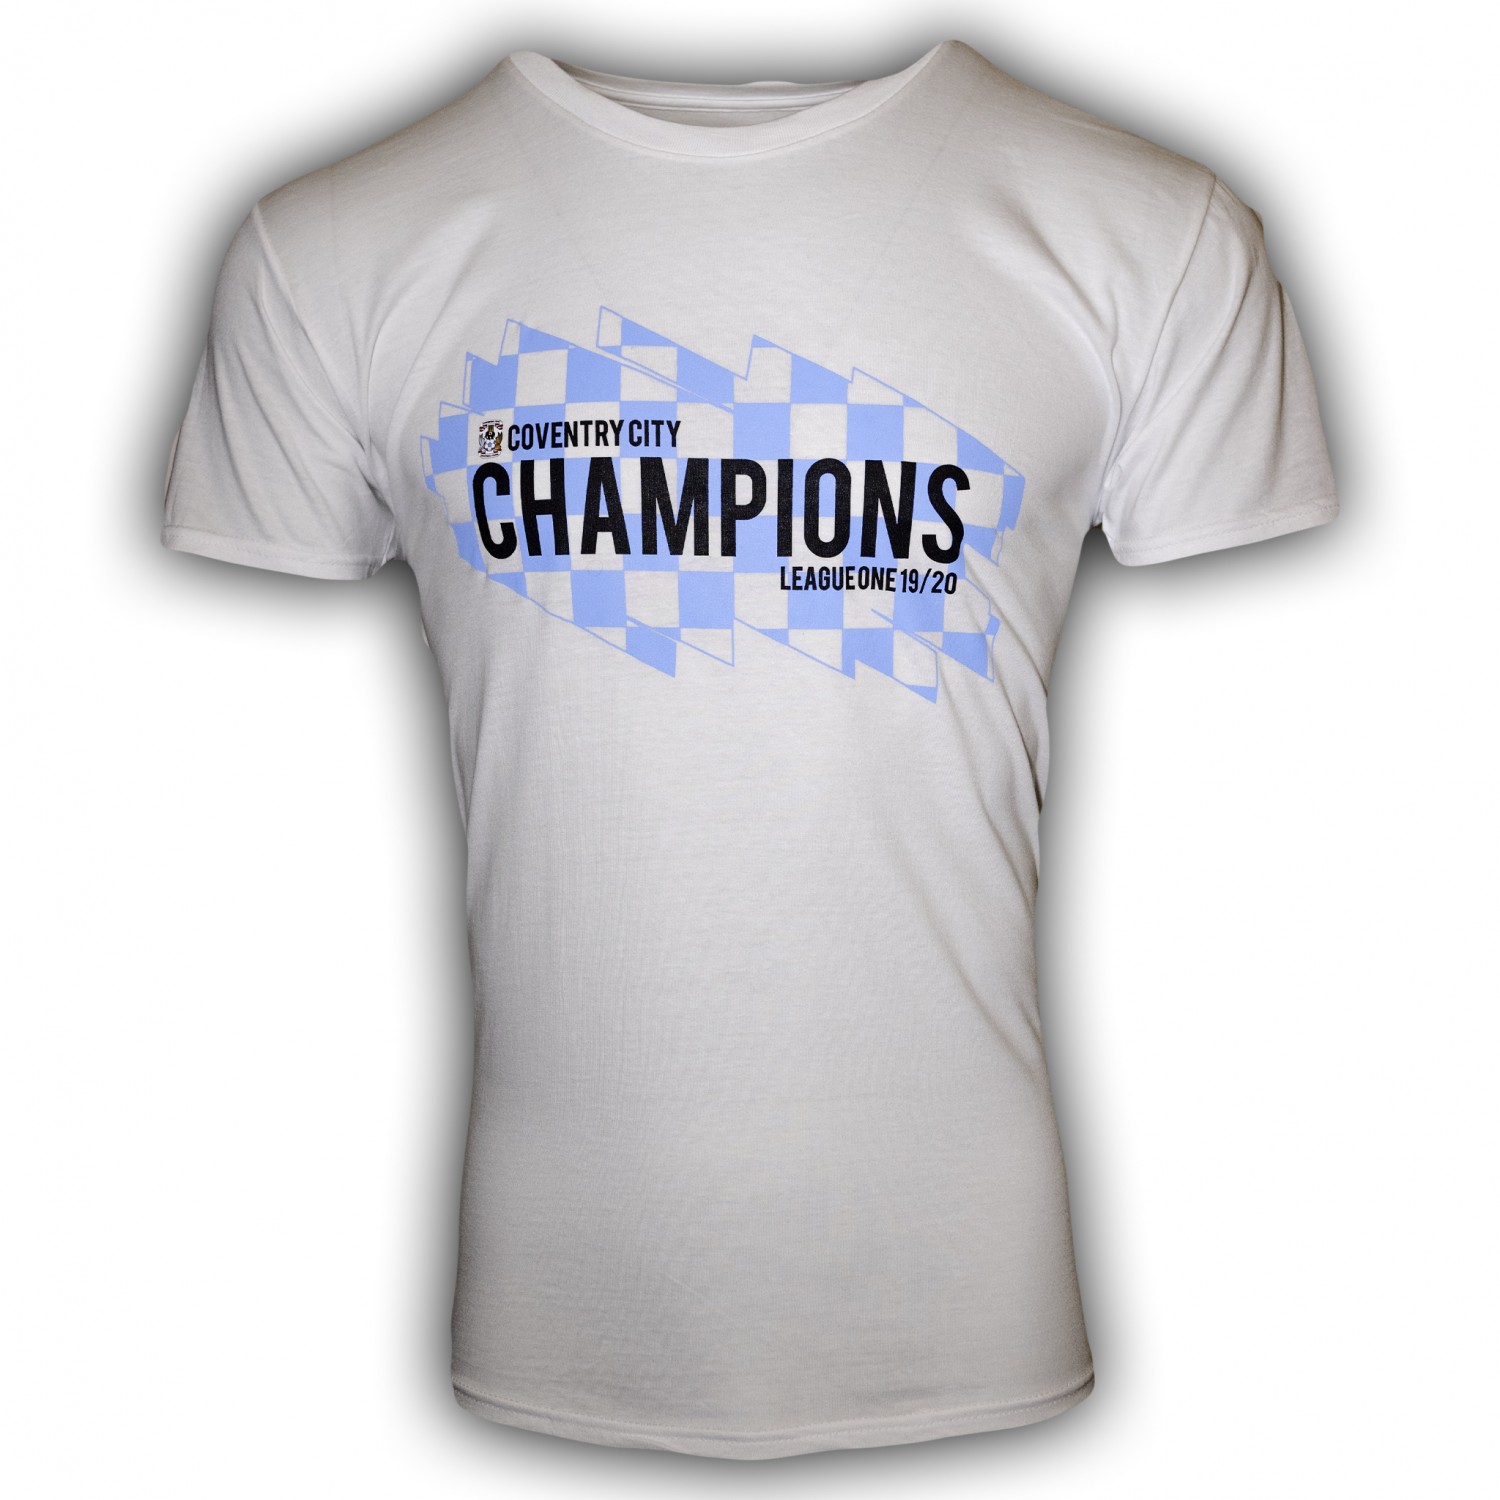 champion t shirt junior